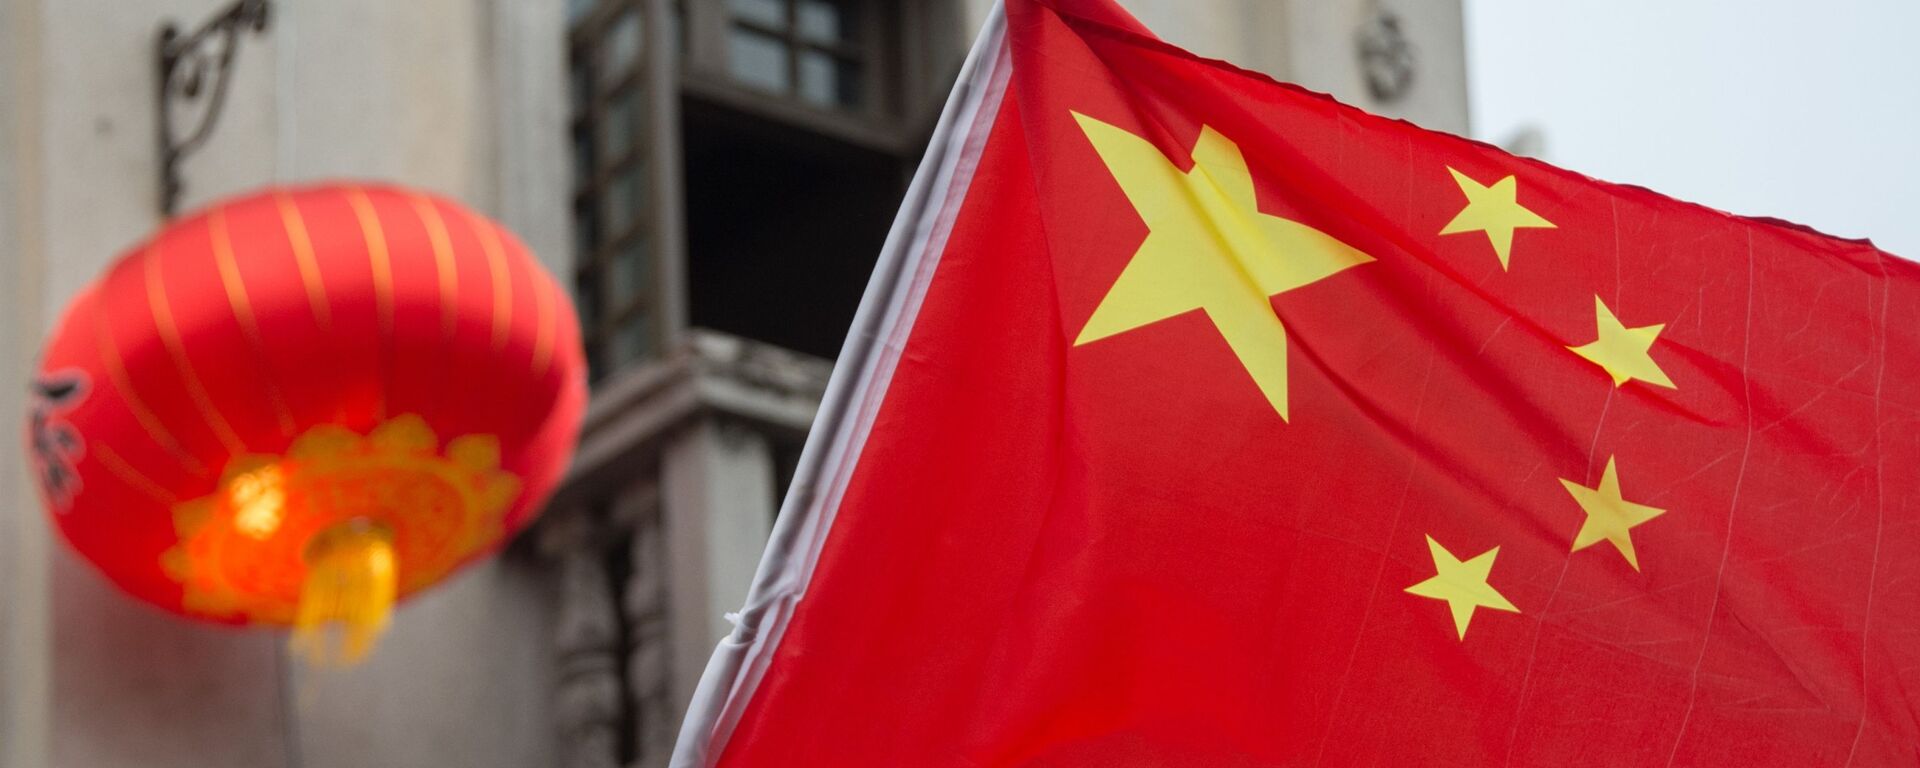 La bandera de China - Sputnik Mundo, 1920, 01.12.2020